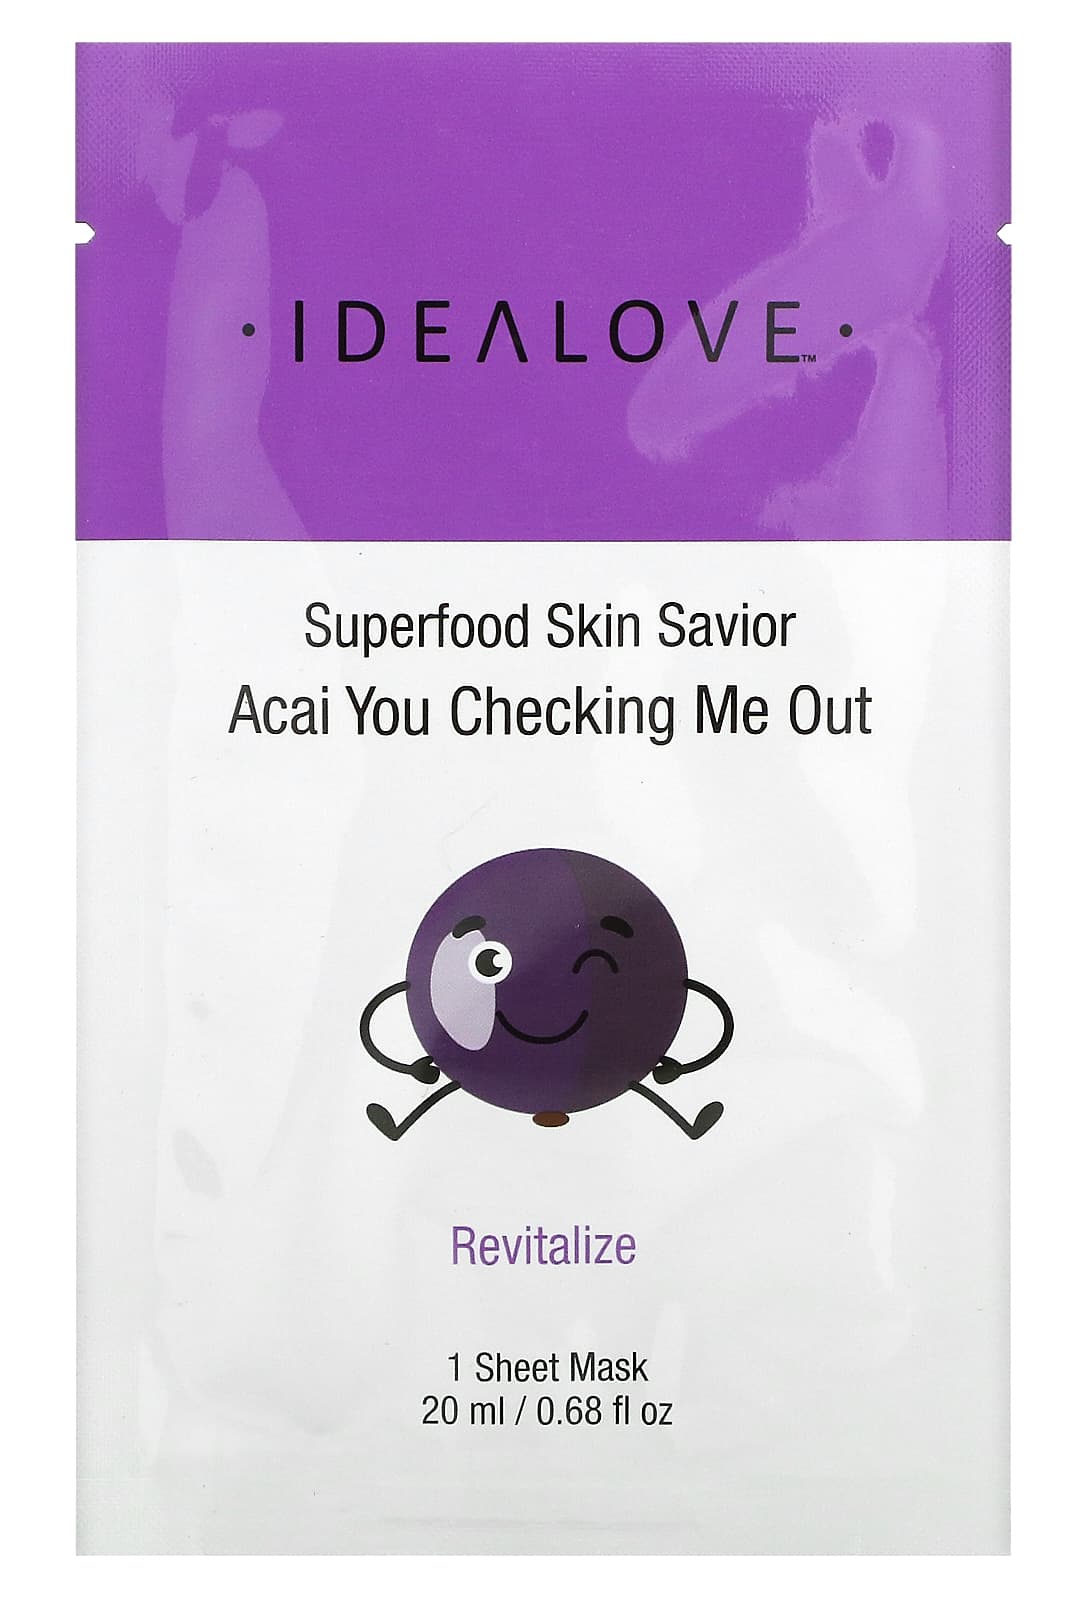 Idealove Superfood Skin Savior Acai You Checking Me Out Revitalize